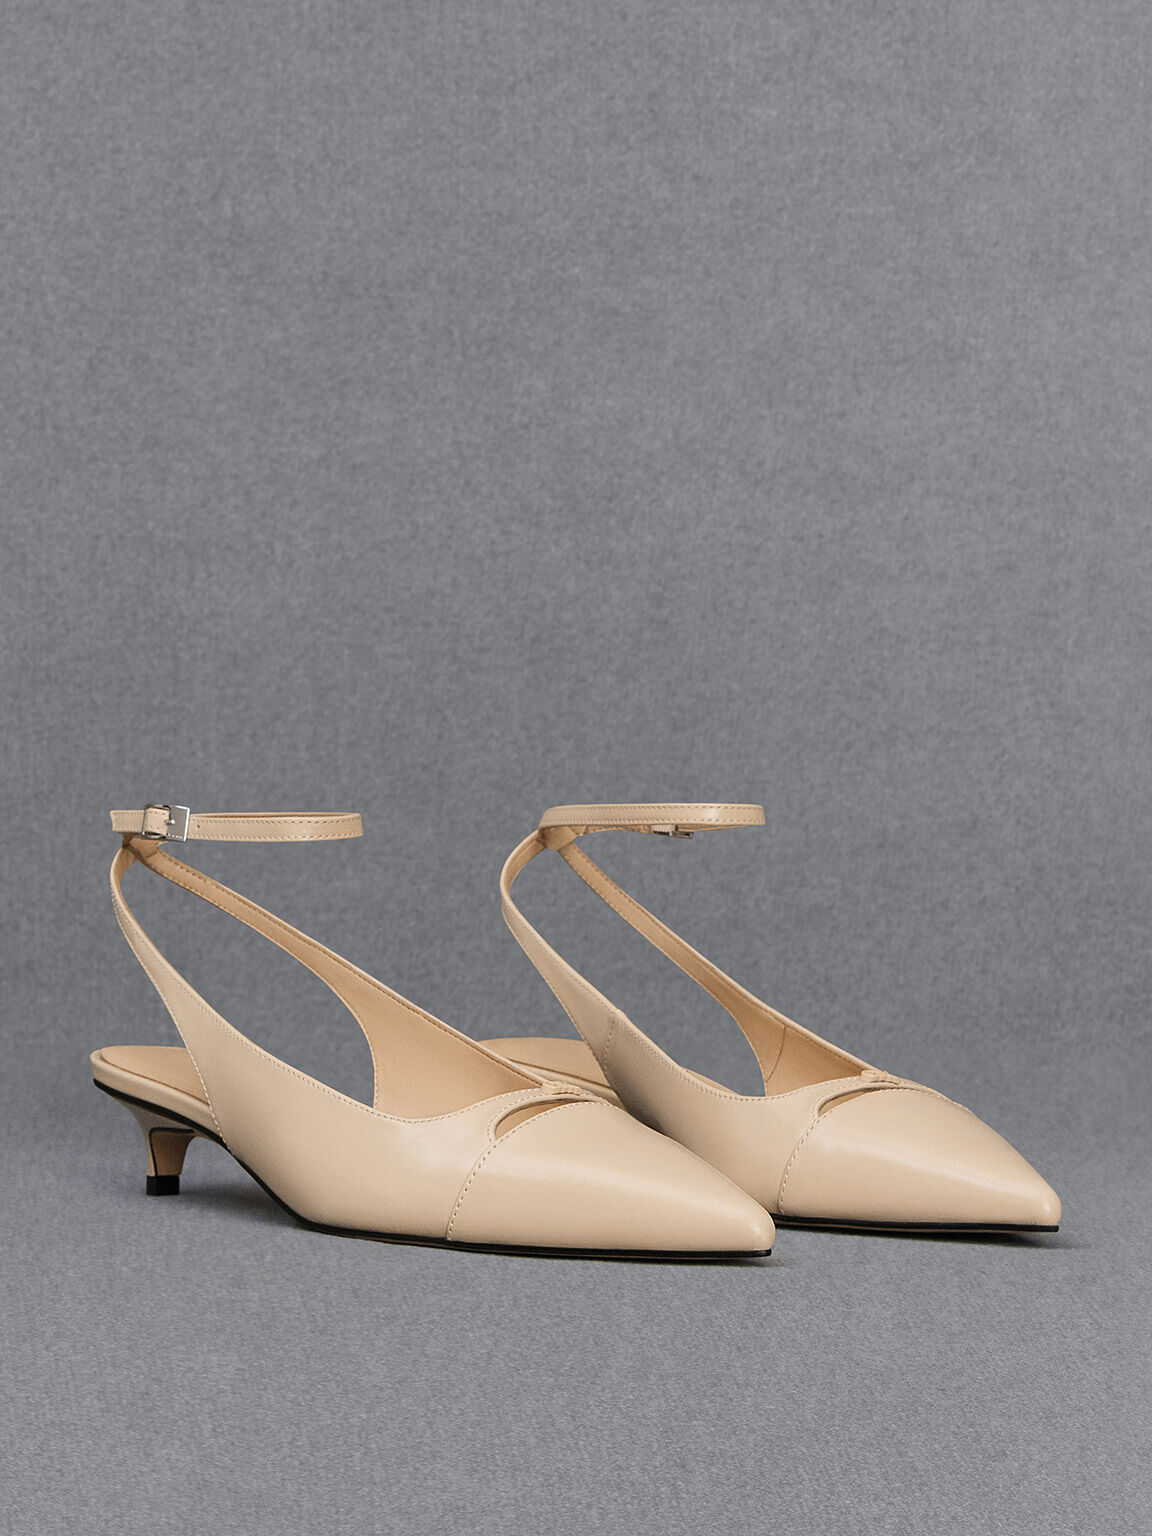 Nude Pointed Toe Slingback Heels | CHARLES & KEITH US | Shoes heels classy,  Wedding shoes heels, Womens fashion shoes